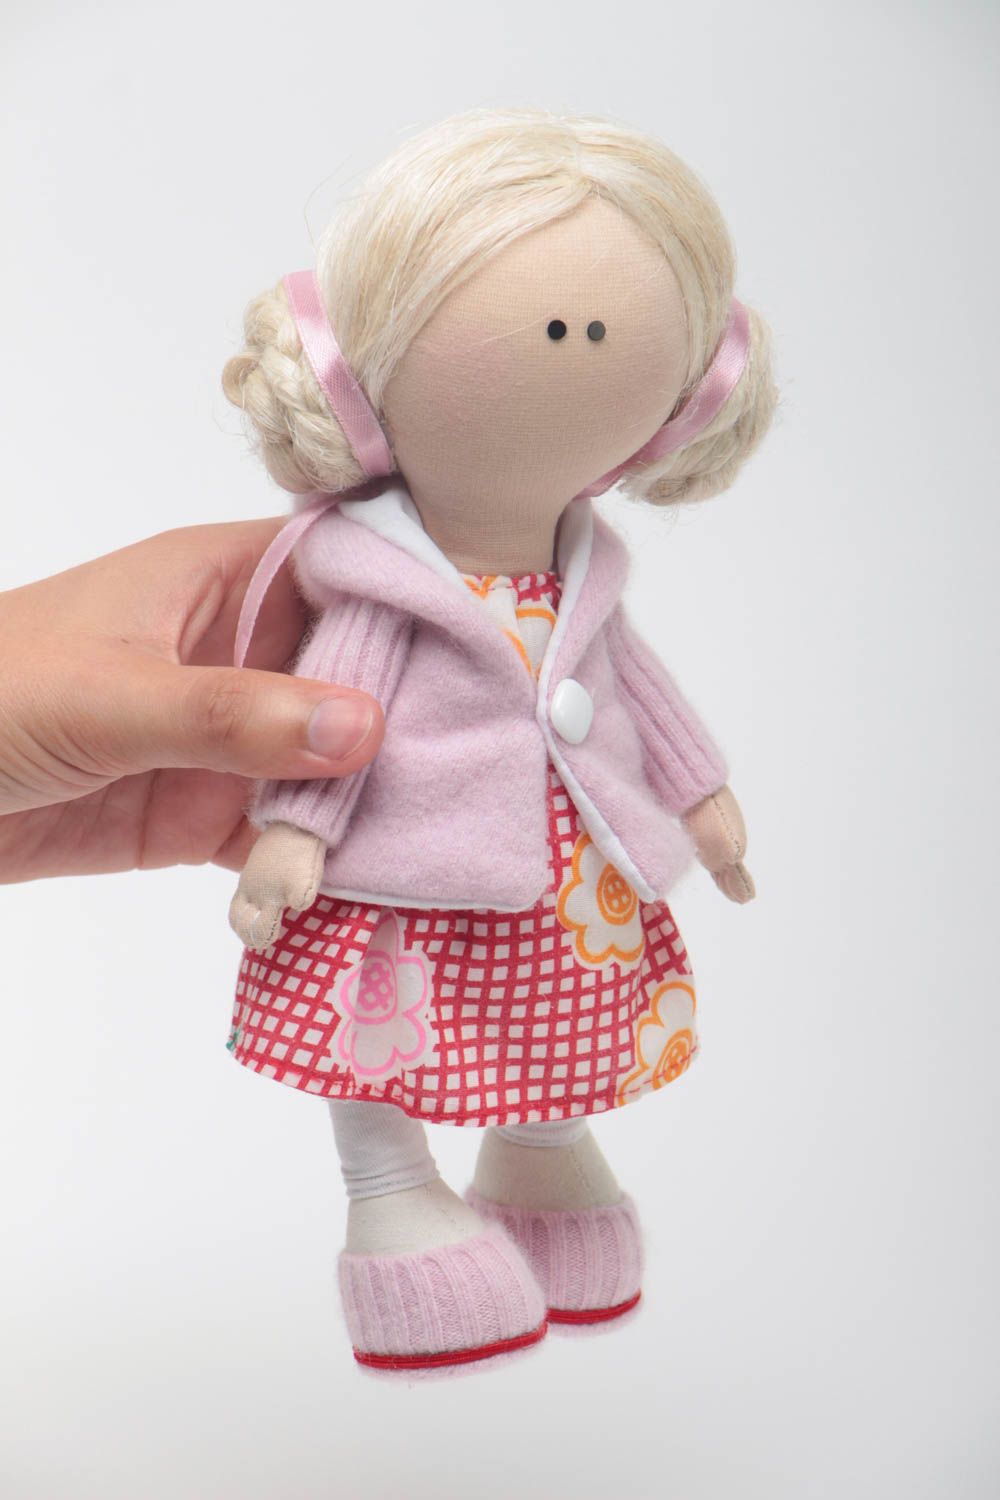 Handmade doll decorative doll nursery decor ideas unusual gift for children photo 5